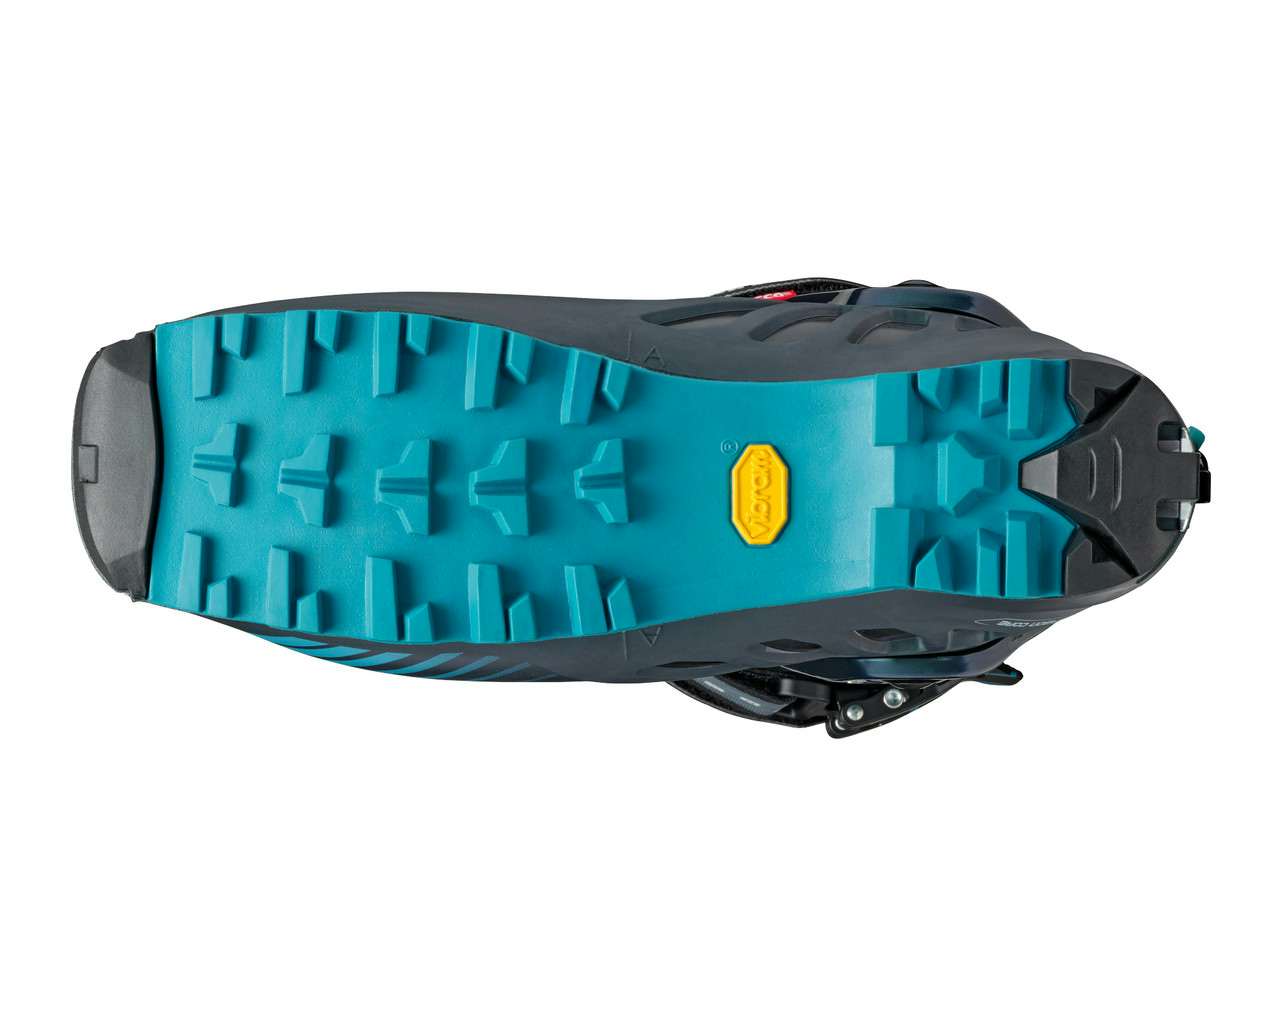 F1 Ski Boots Anthracite/Aqua